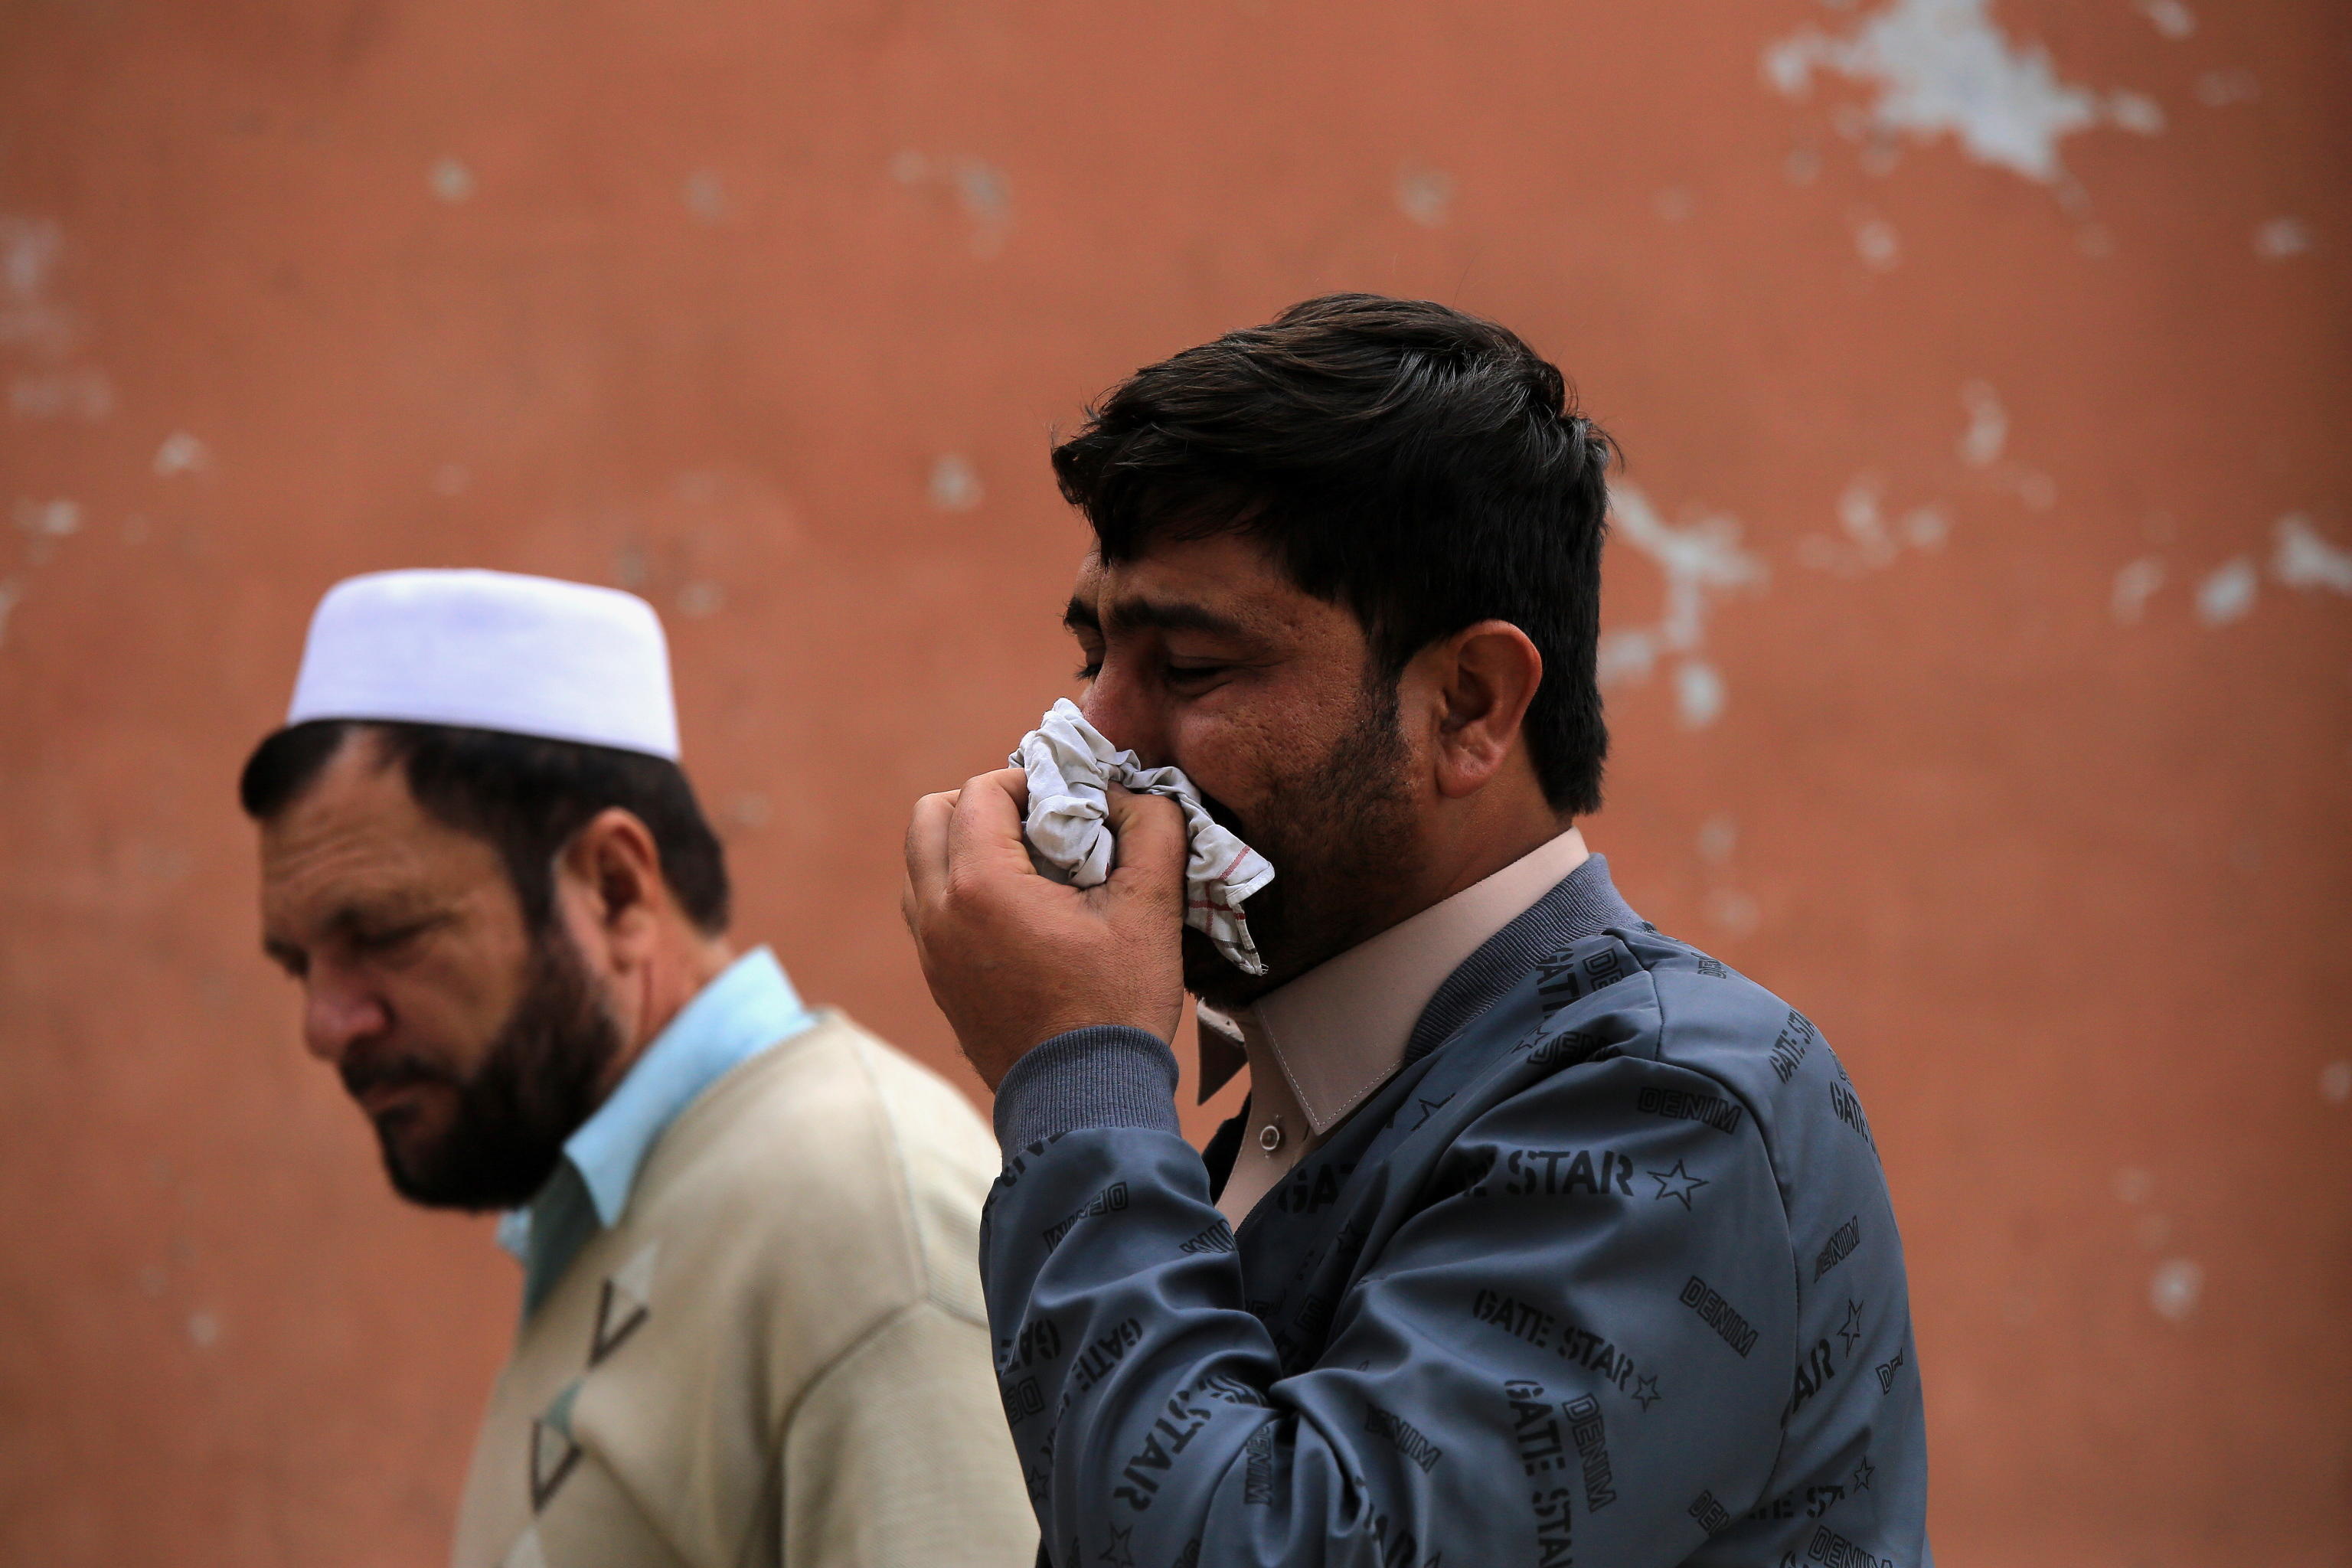 EPA/ARSHAD ARBAB attentaot moschea talebani polizia pakistan